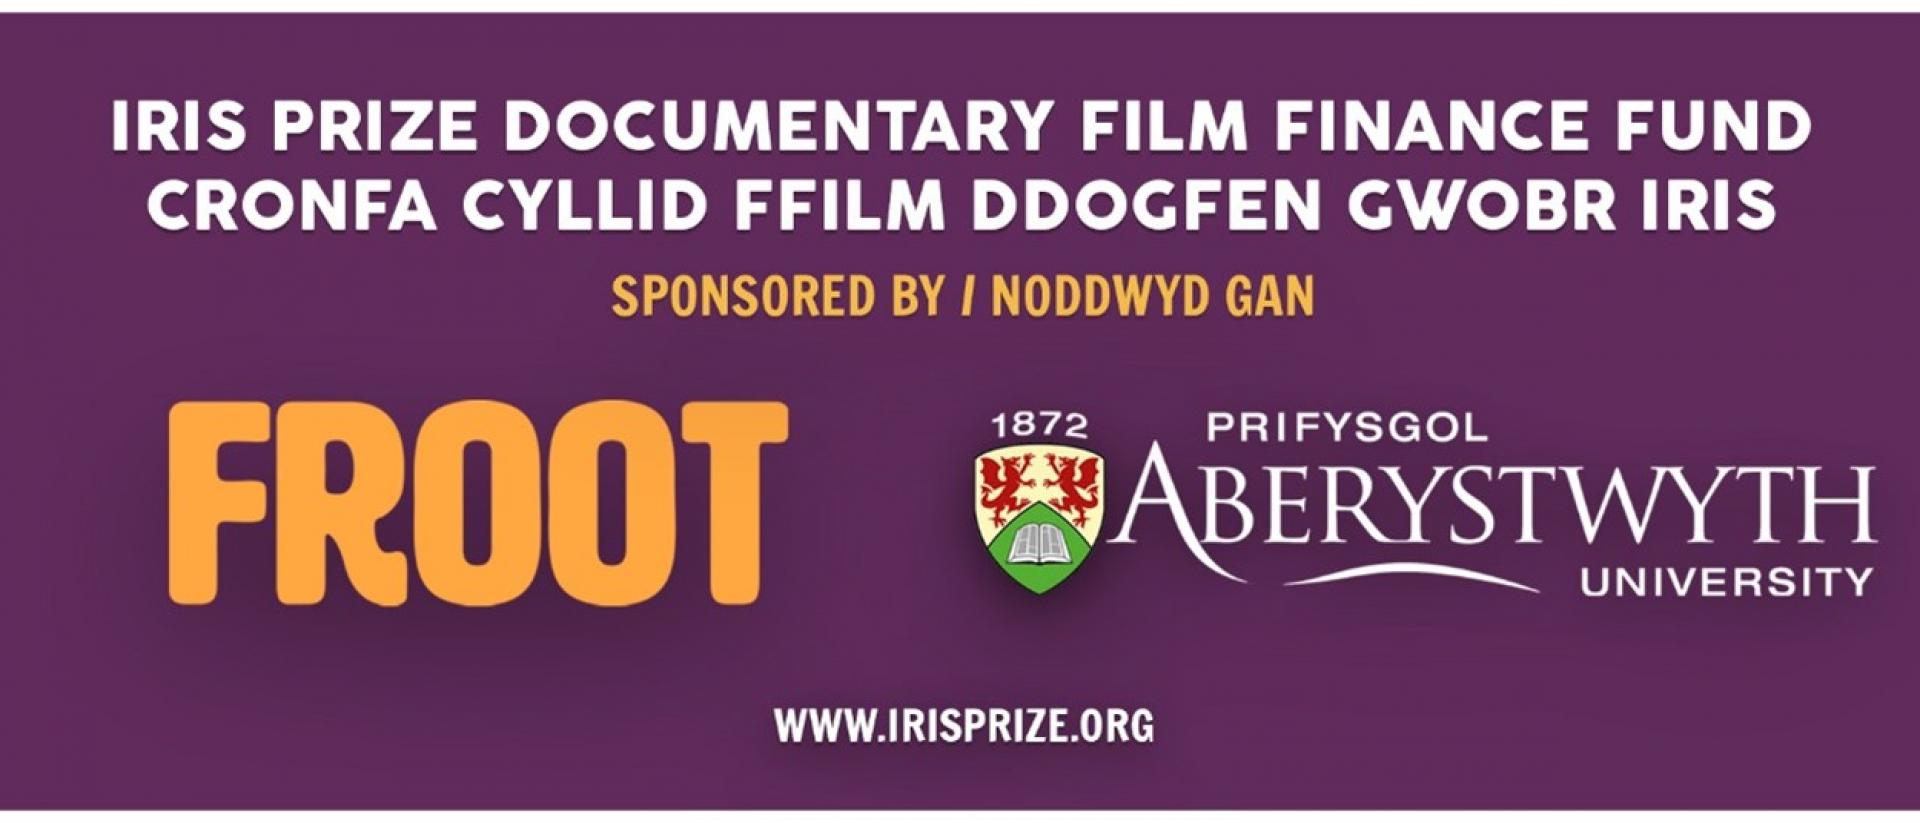 purple graphic with text for the iris prize documentary film finance fund / cronfa cyllid ffilmddogfen gwobr iris